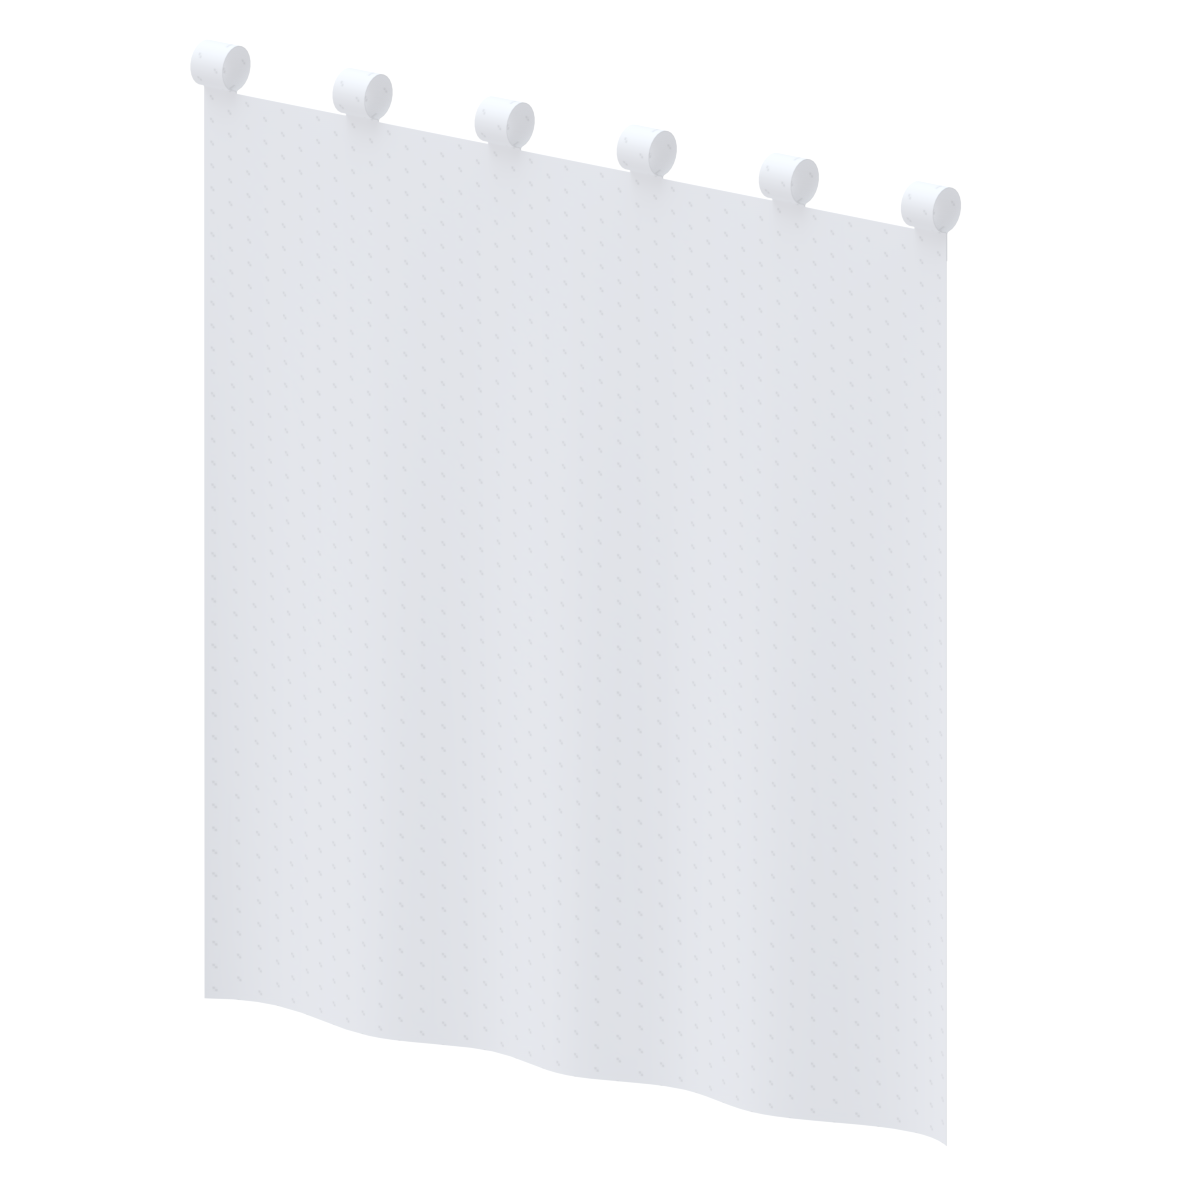 Care Shower guard rail, 750 x 690 x 1 mm, White